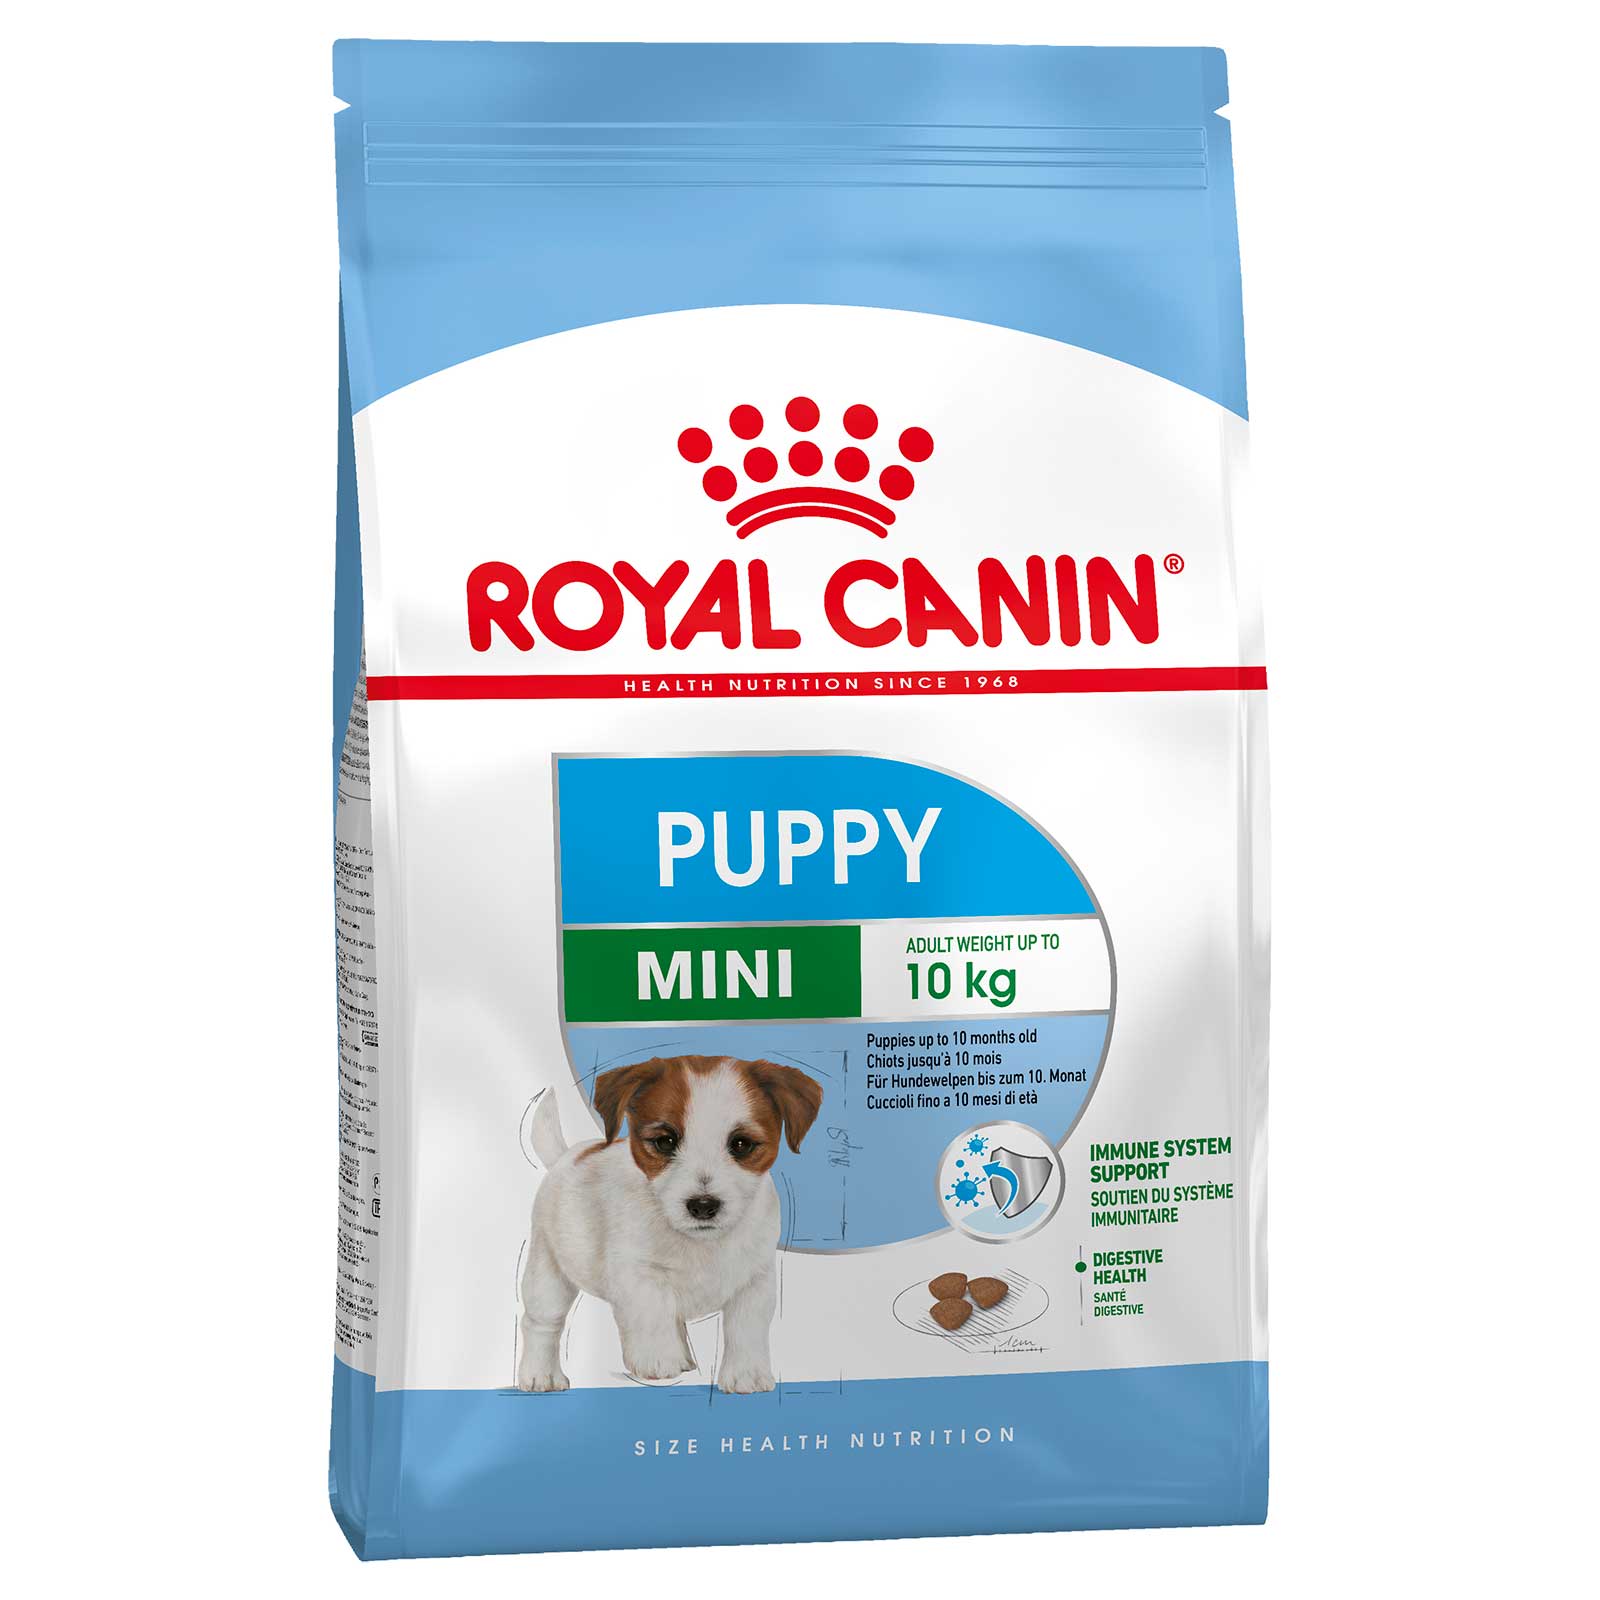 Royal Canin Dog Food Puppy Mini